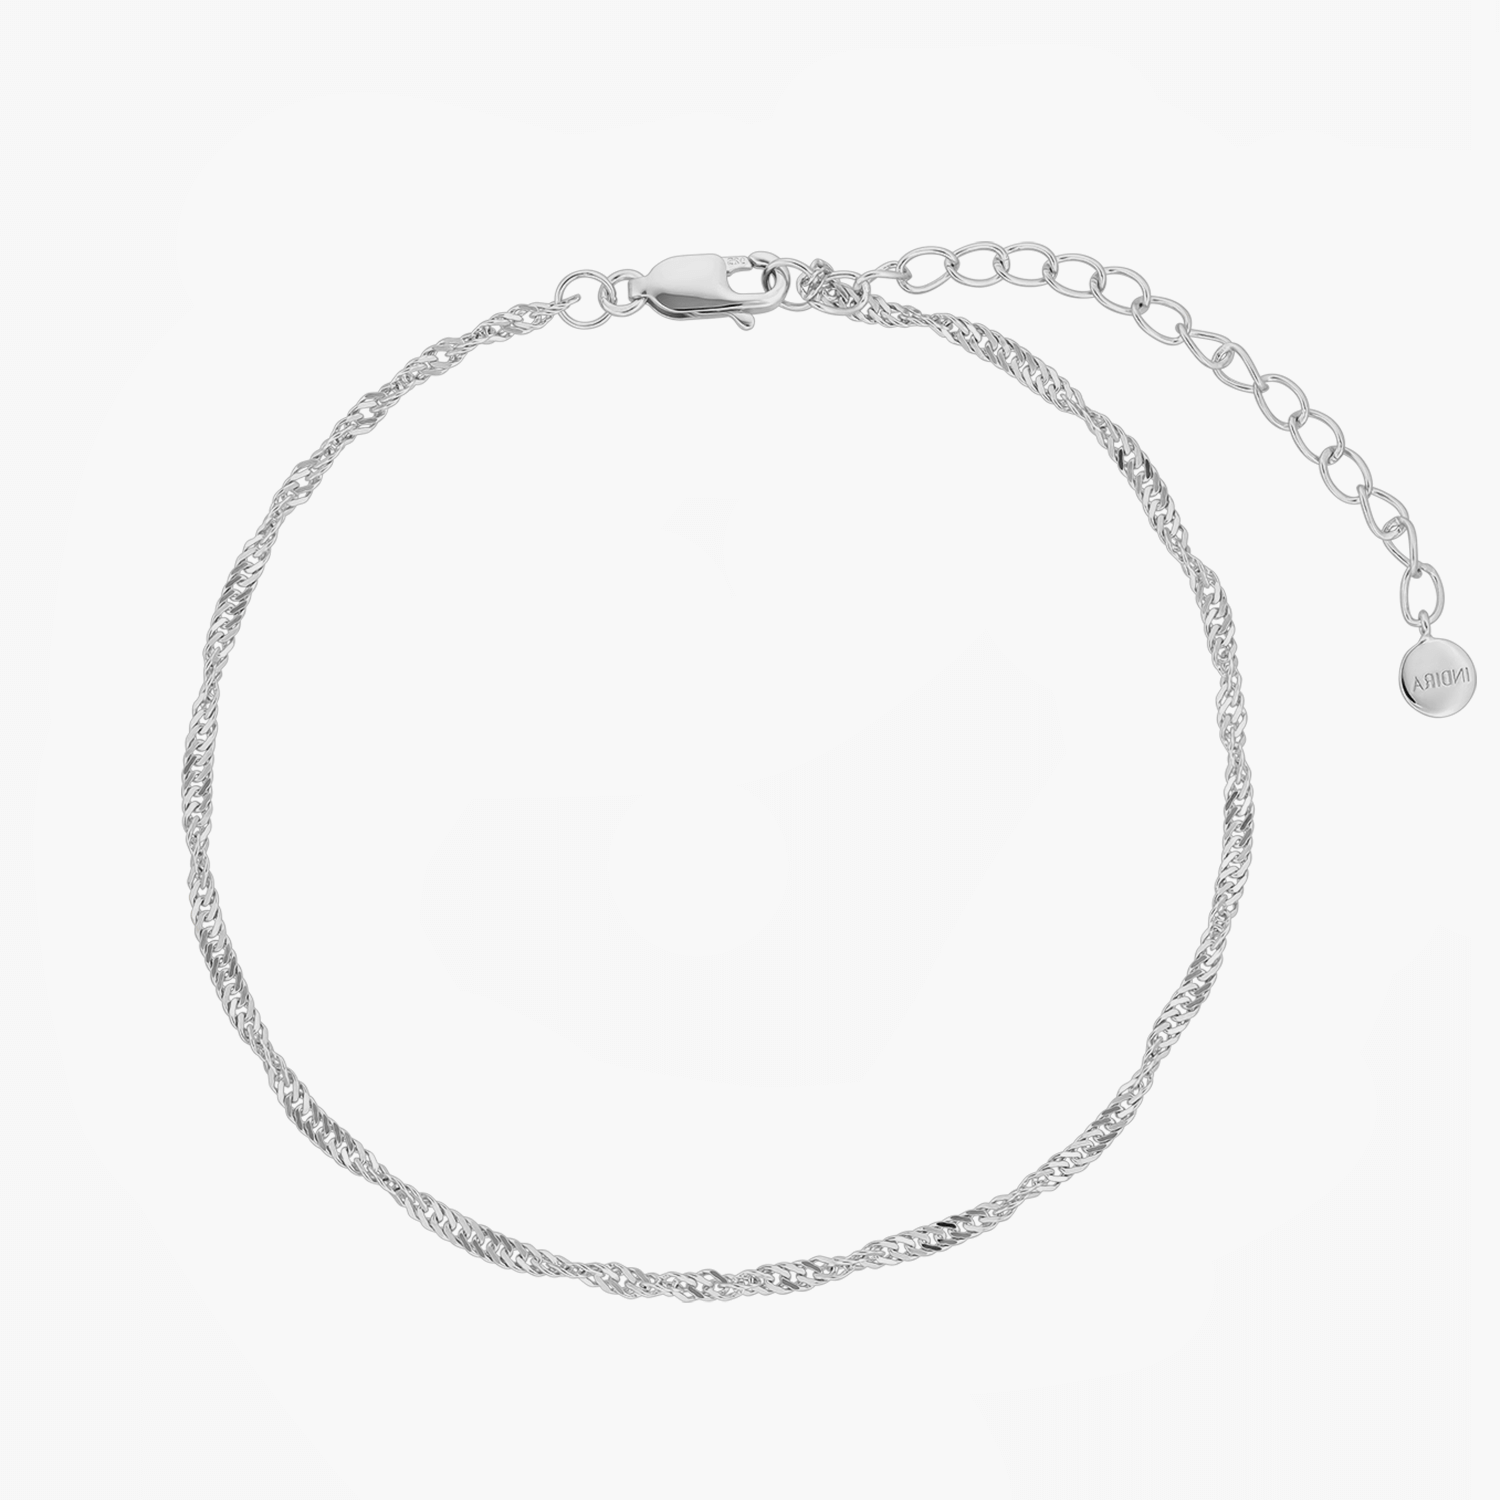 Singapore silver foot bracelet